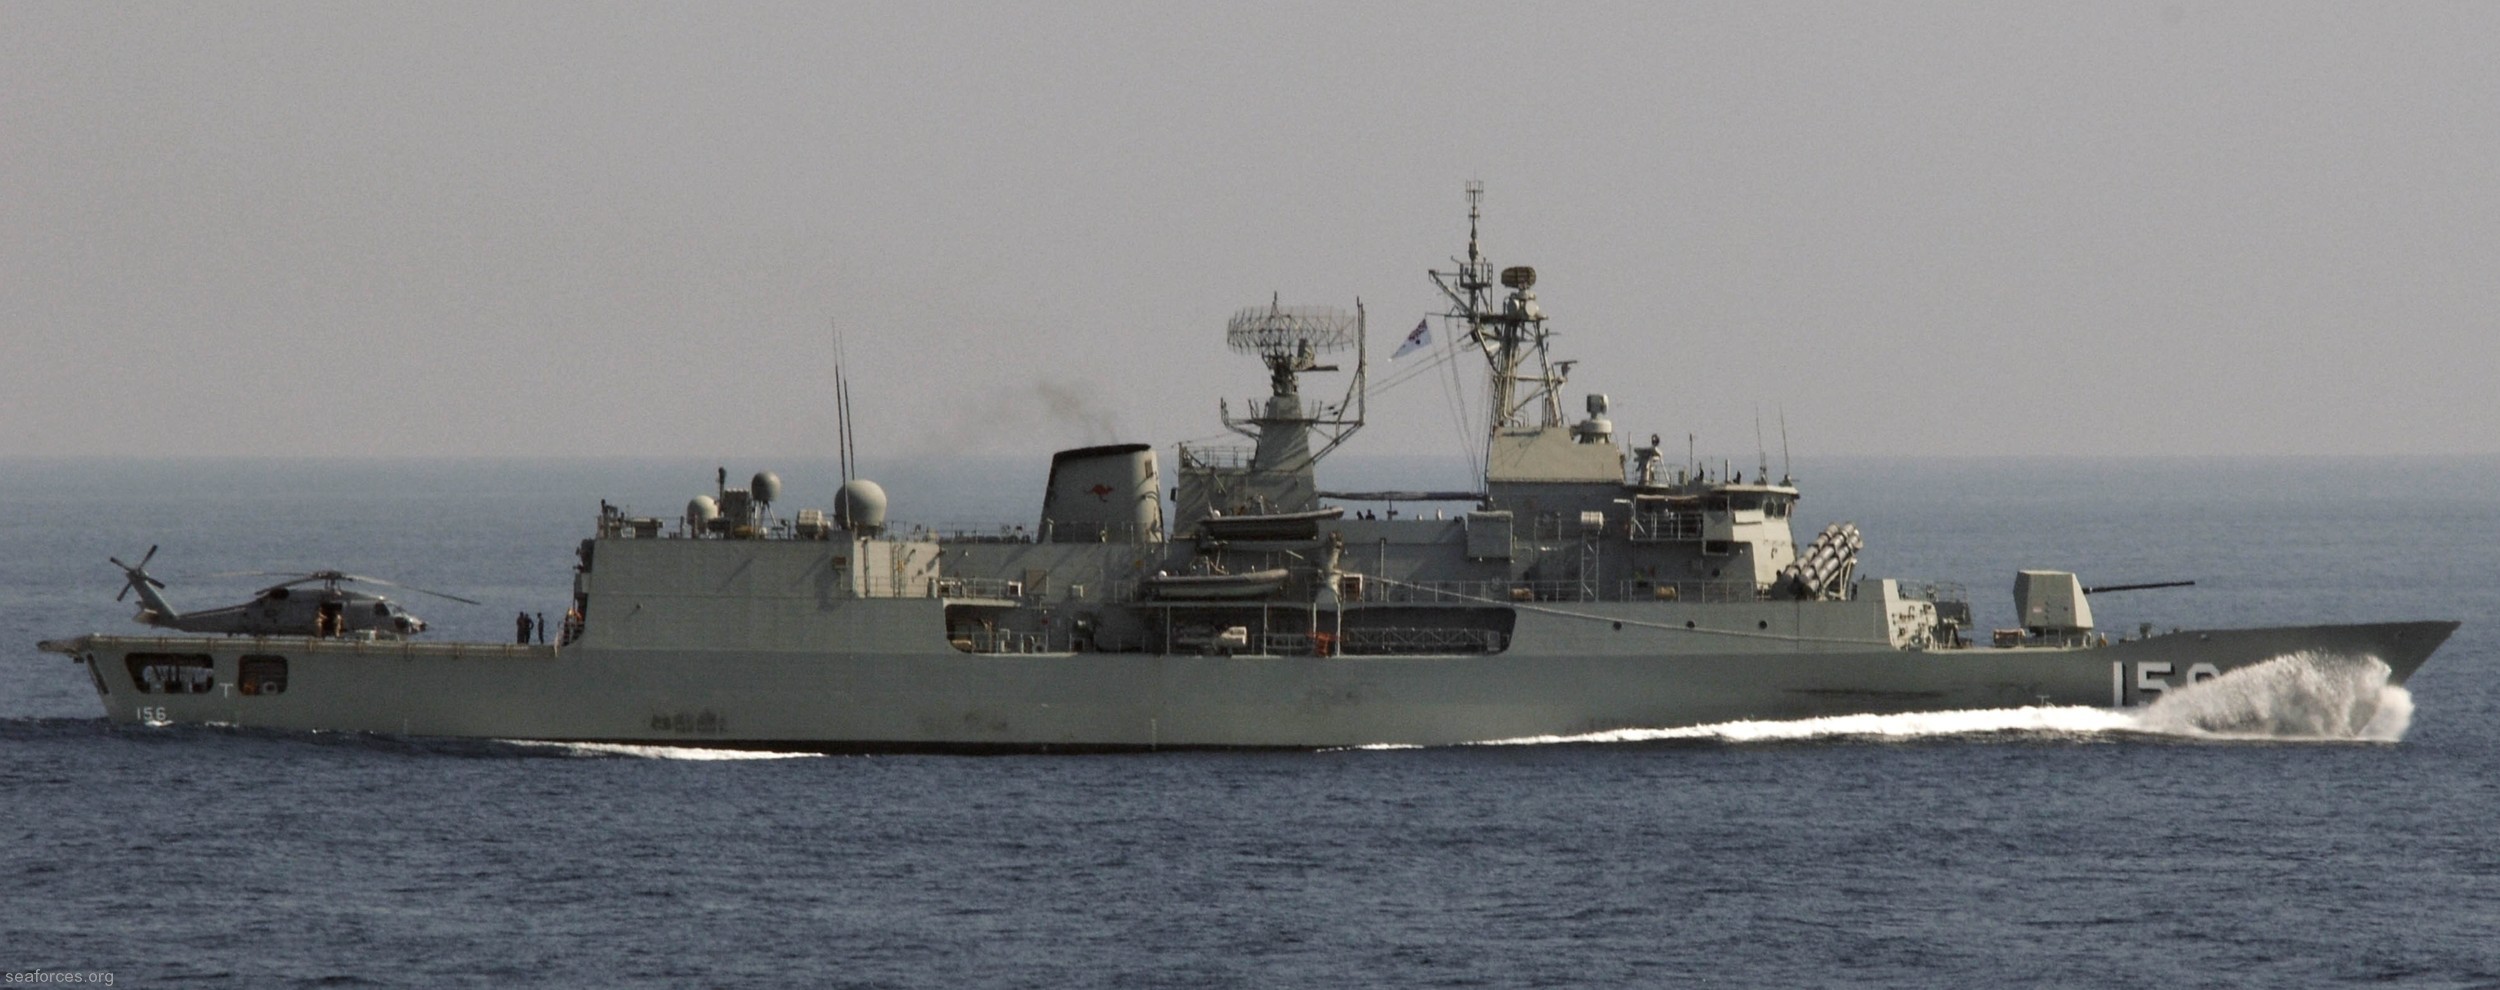 ffh-156 hmas toowoomba anzac class frigate royal australian navy gulf oman 2009 02